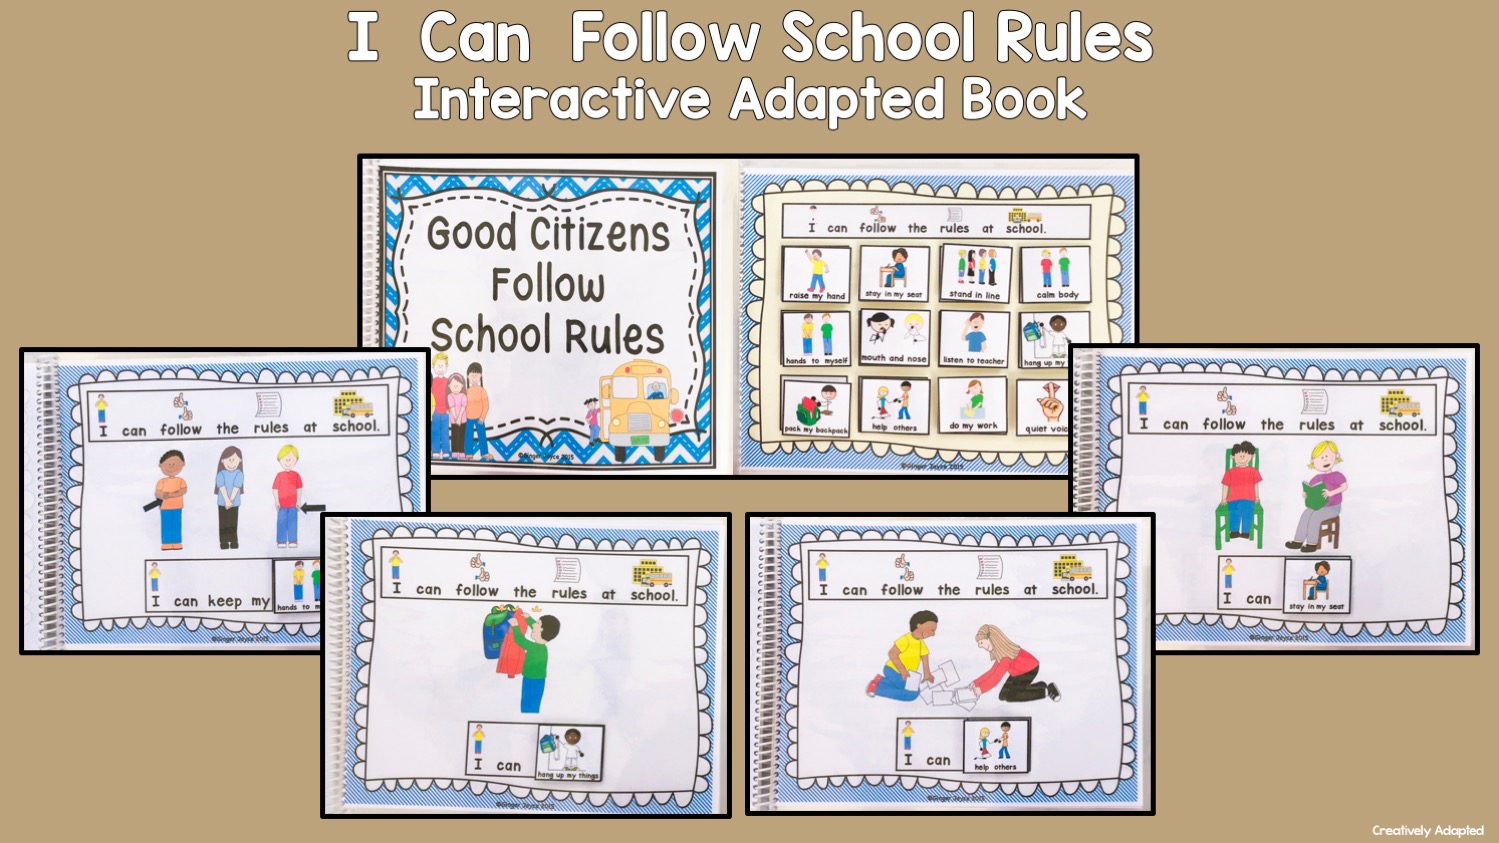 Good Citizens Follow School Rules Adapted Book